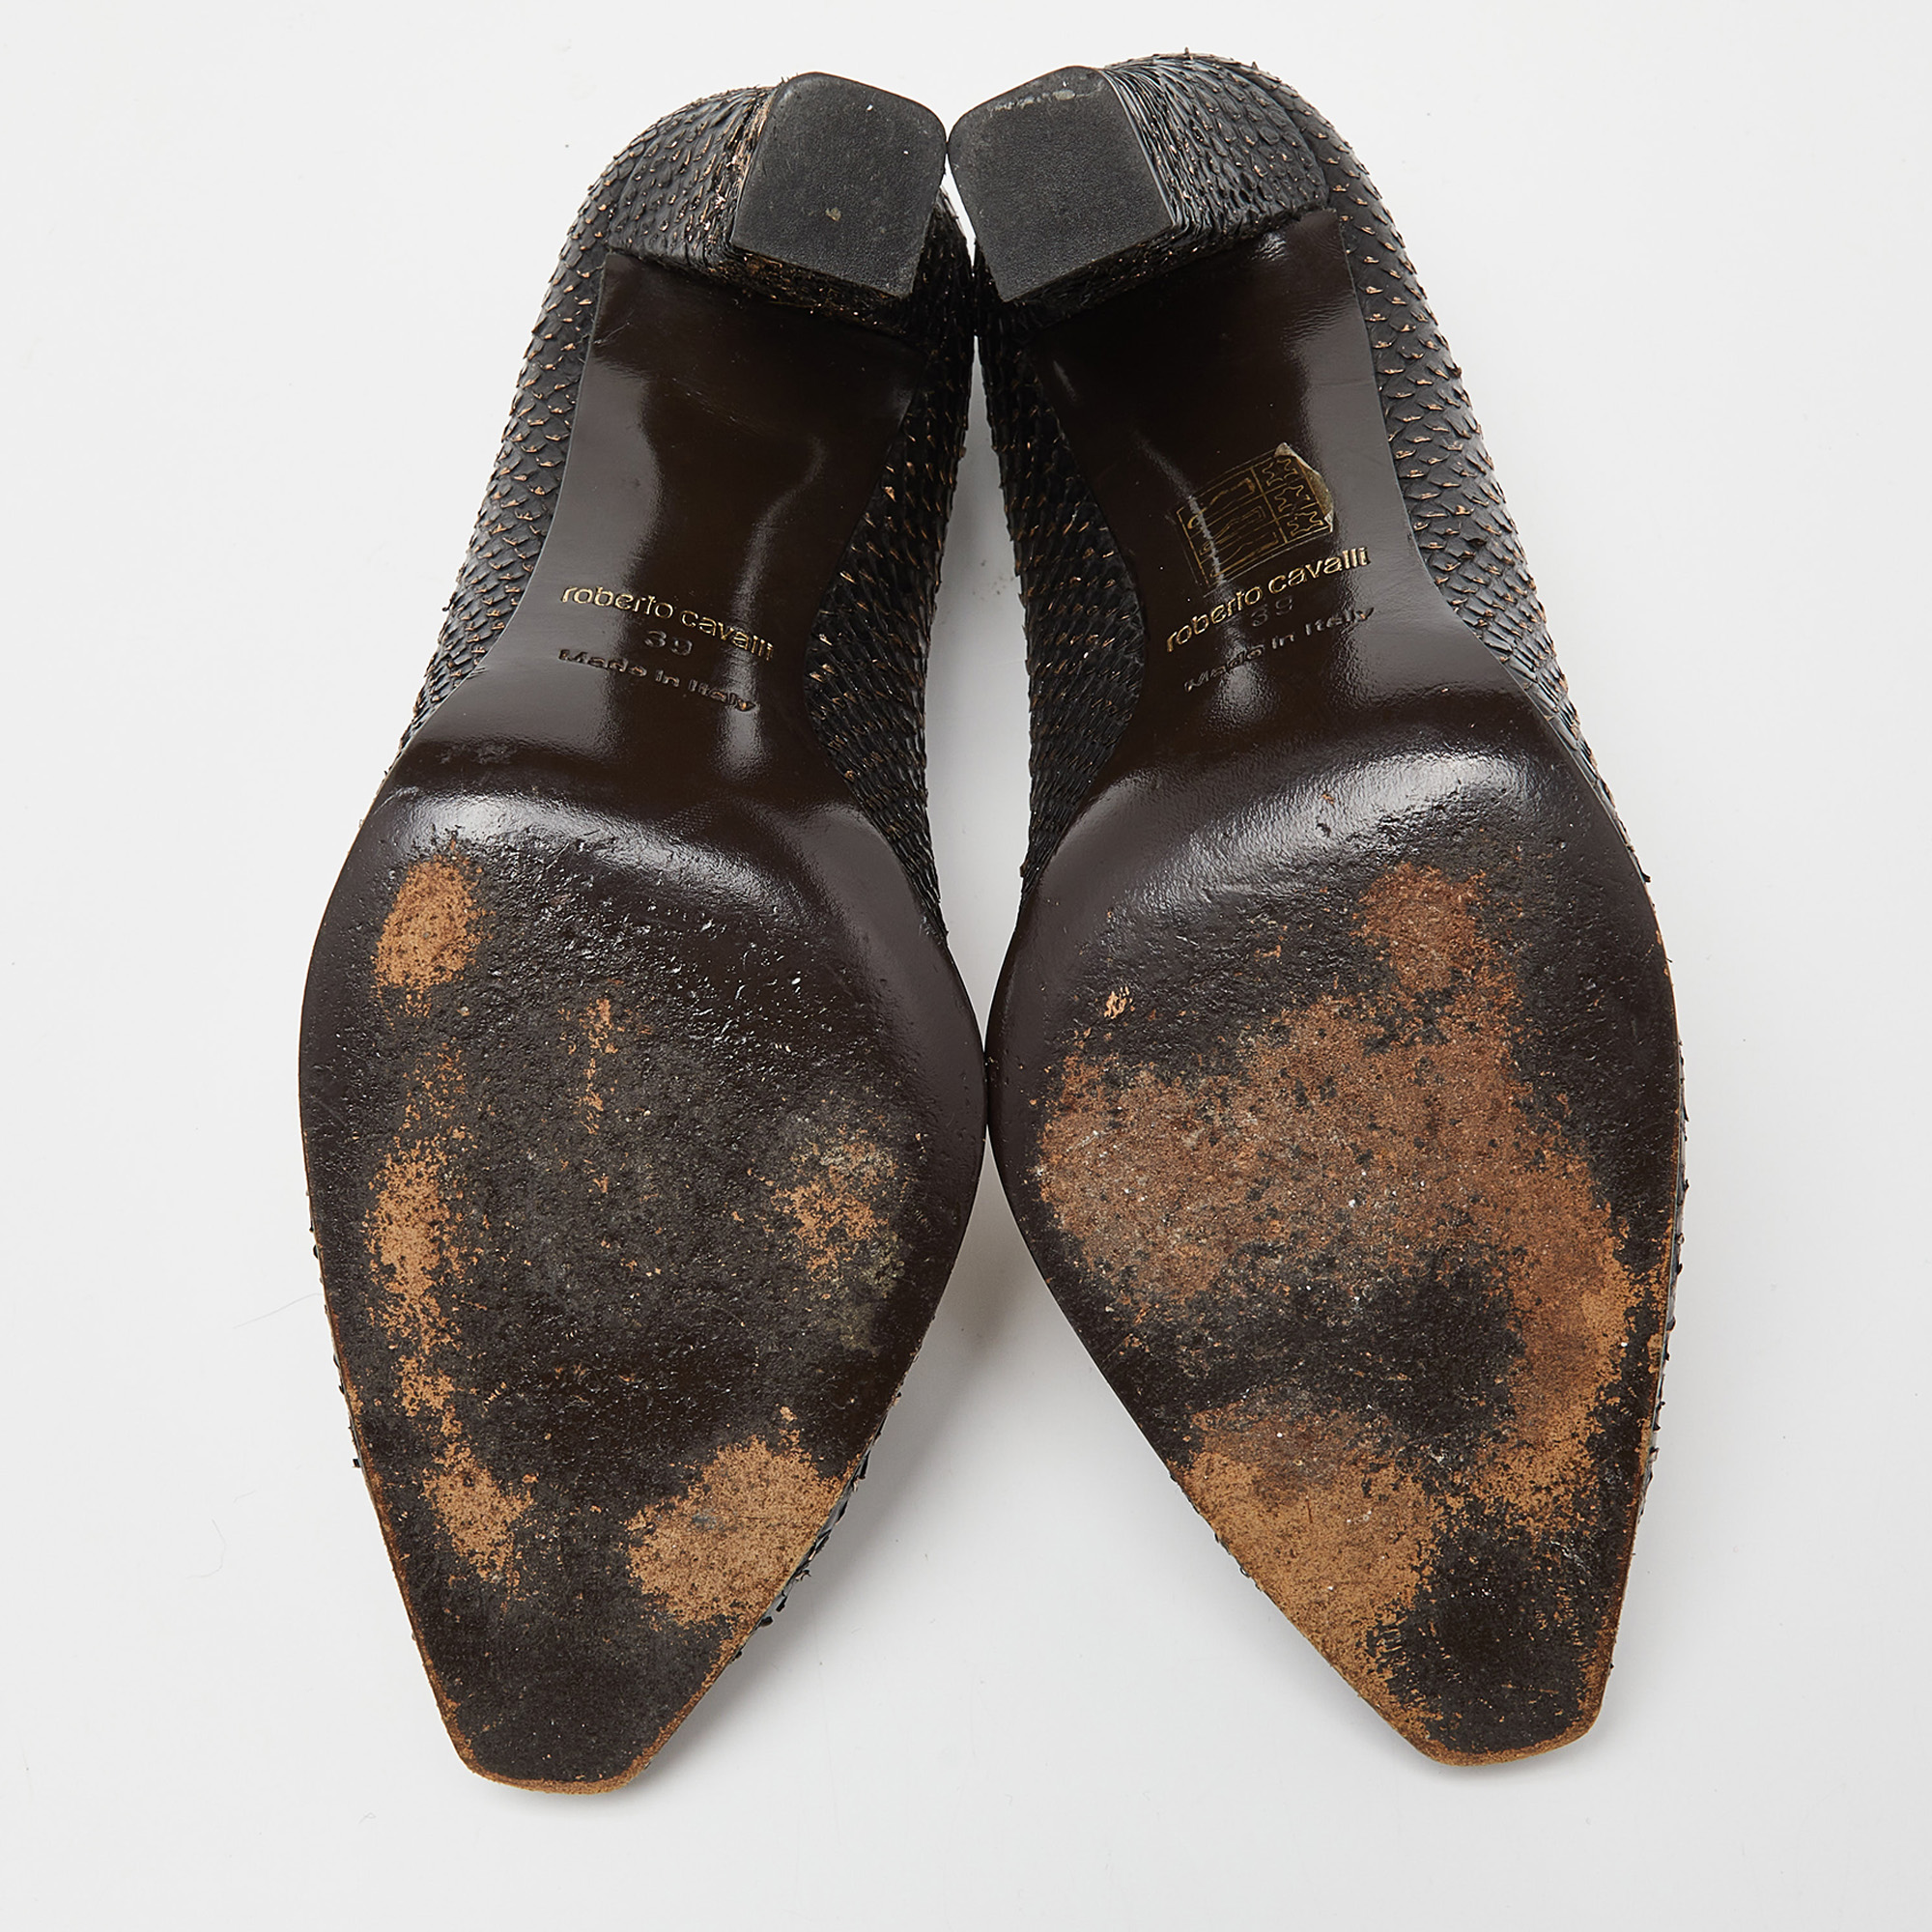 Roberto Cavalli Black/Gold Watersnake Leather Block Heel Pumps Size 39